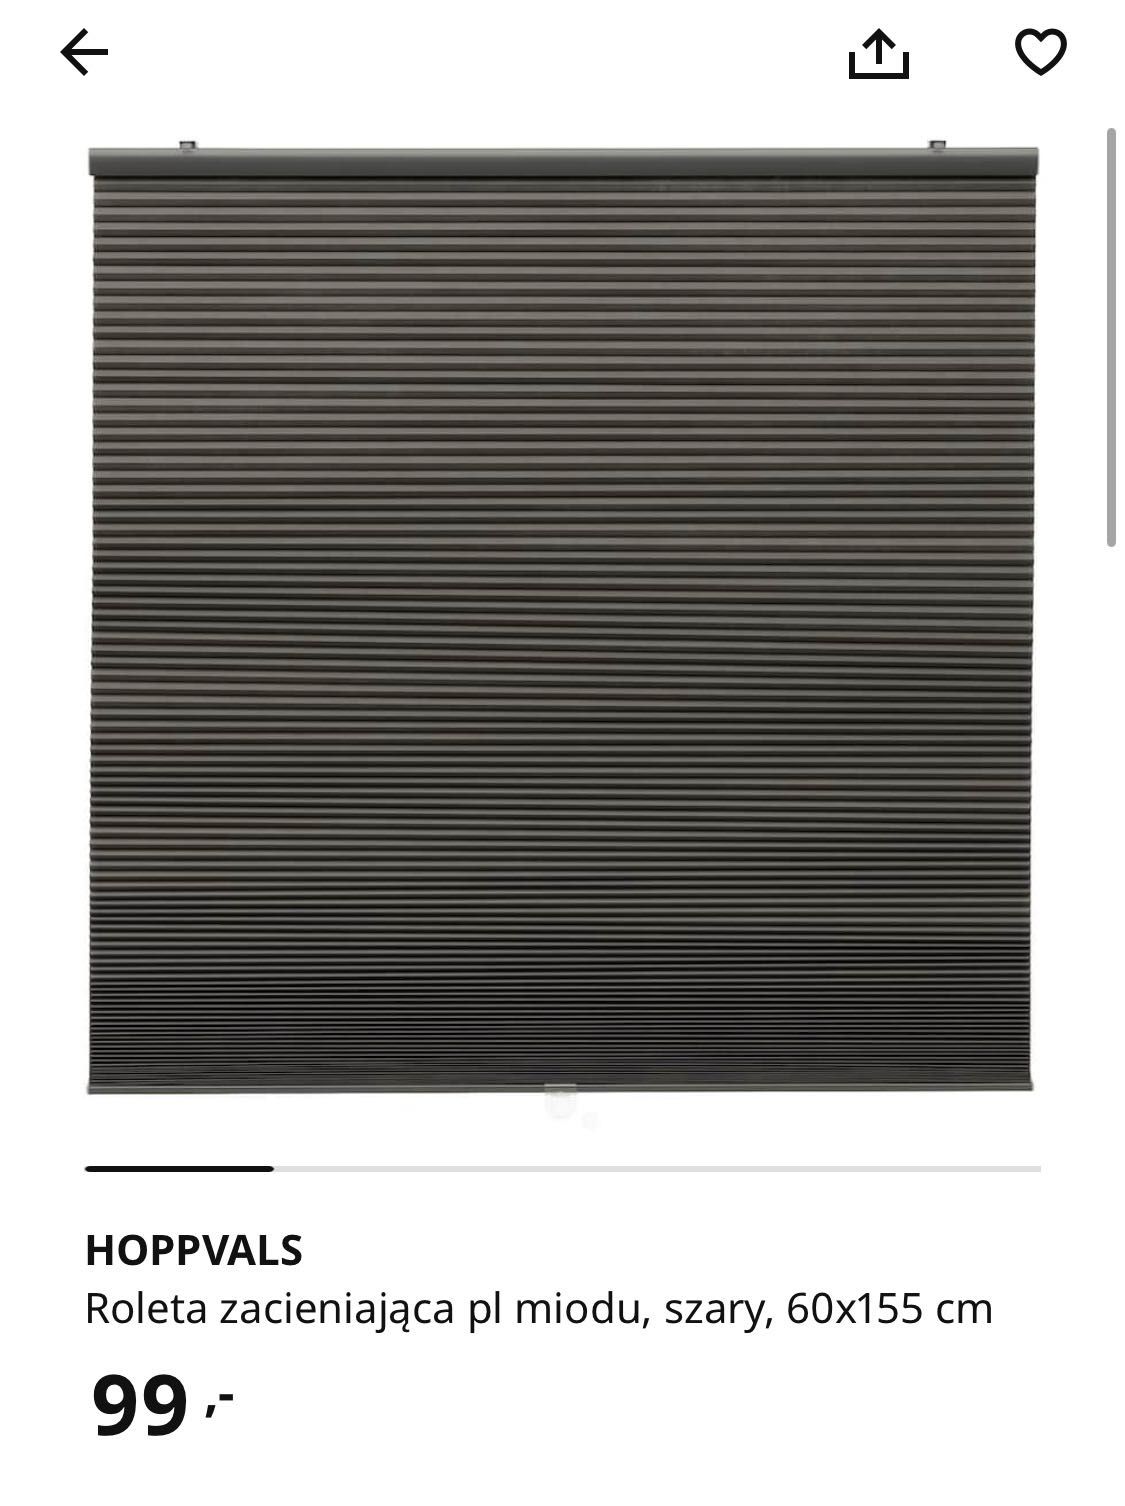 Rolety IKEA Hoppvals 60x155cm